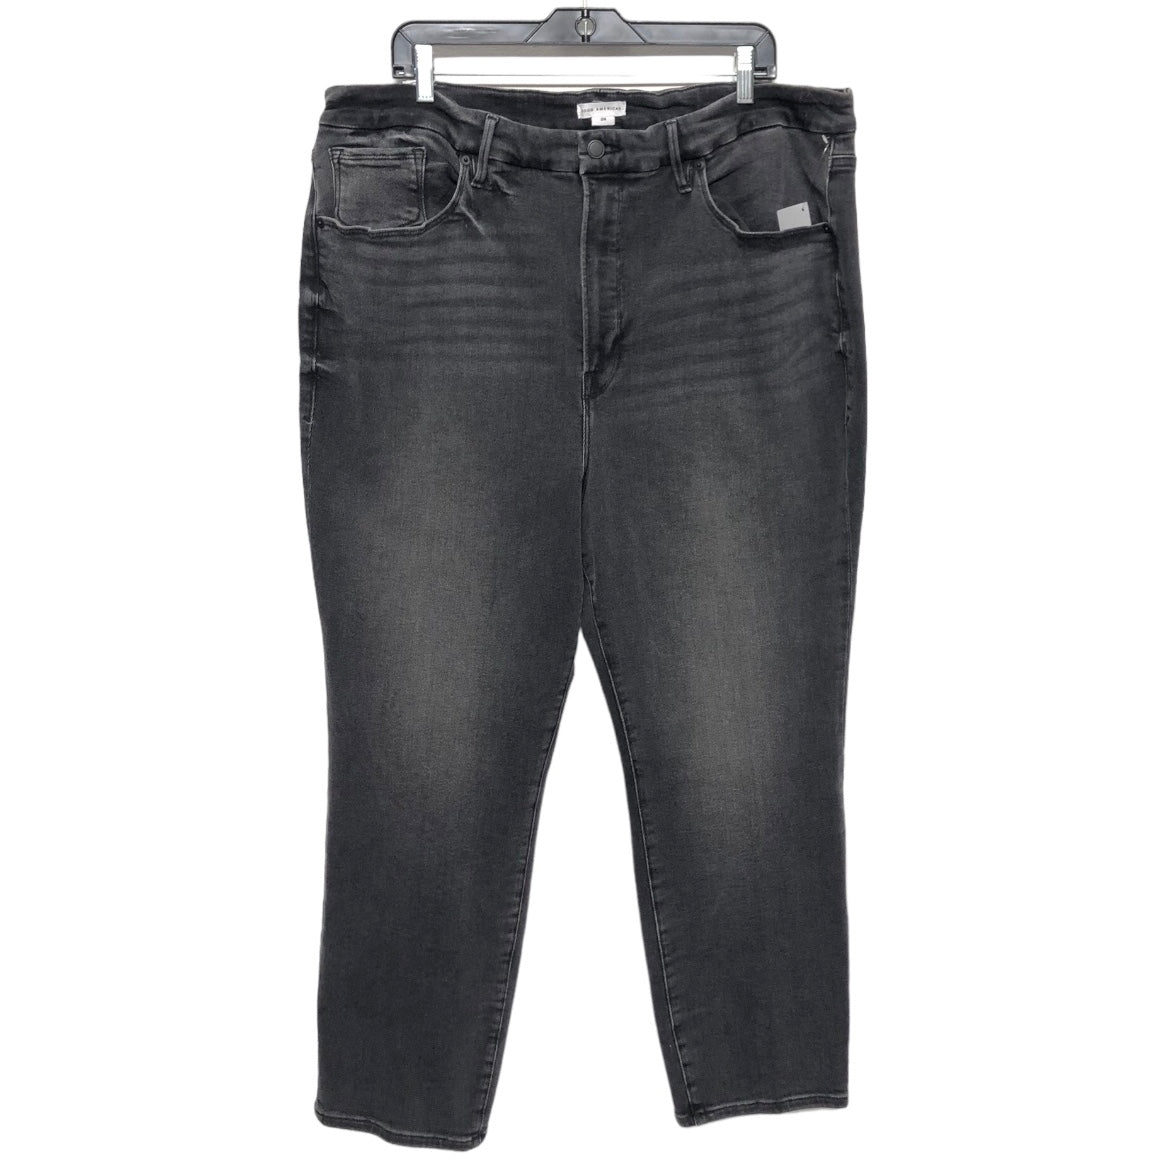 Black Denim Jeans Straight Good American, Size 3x